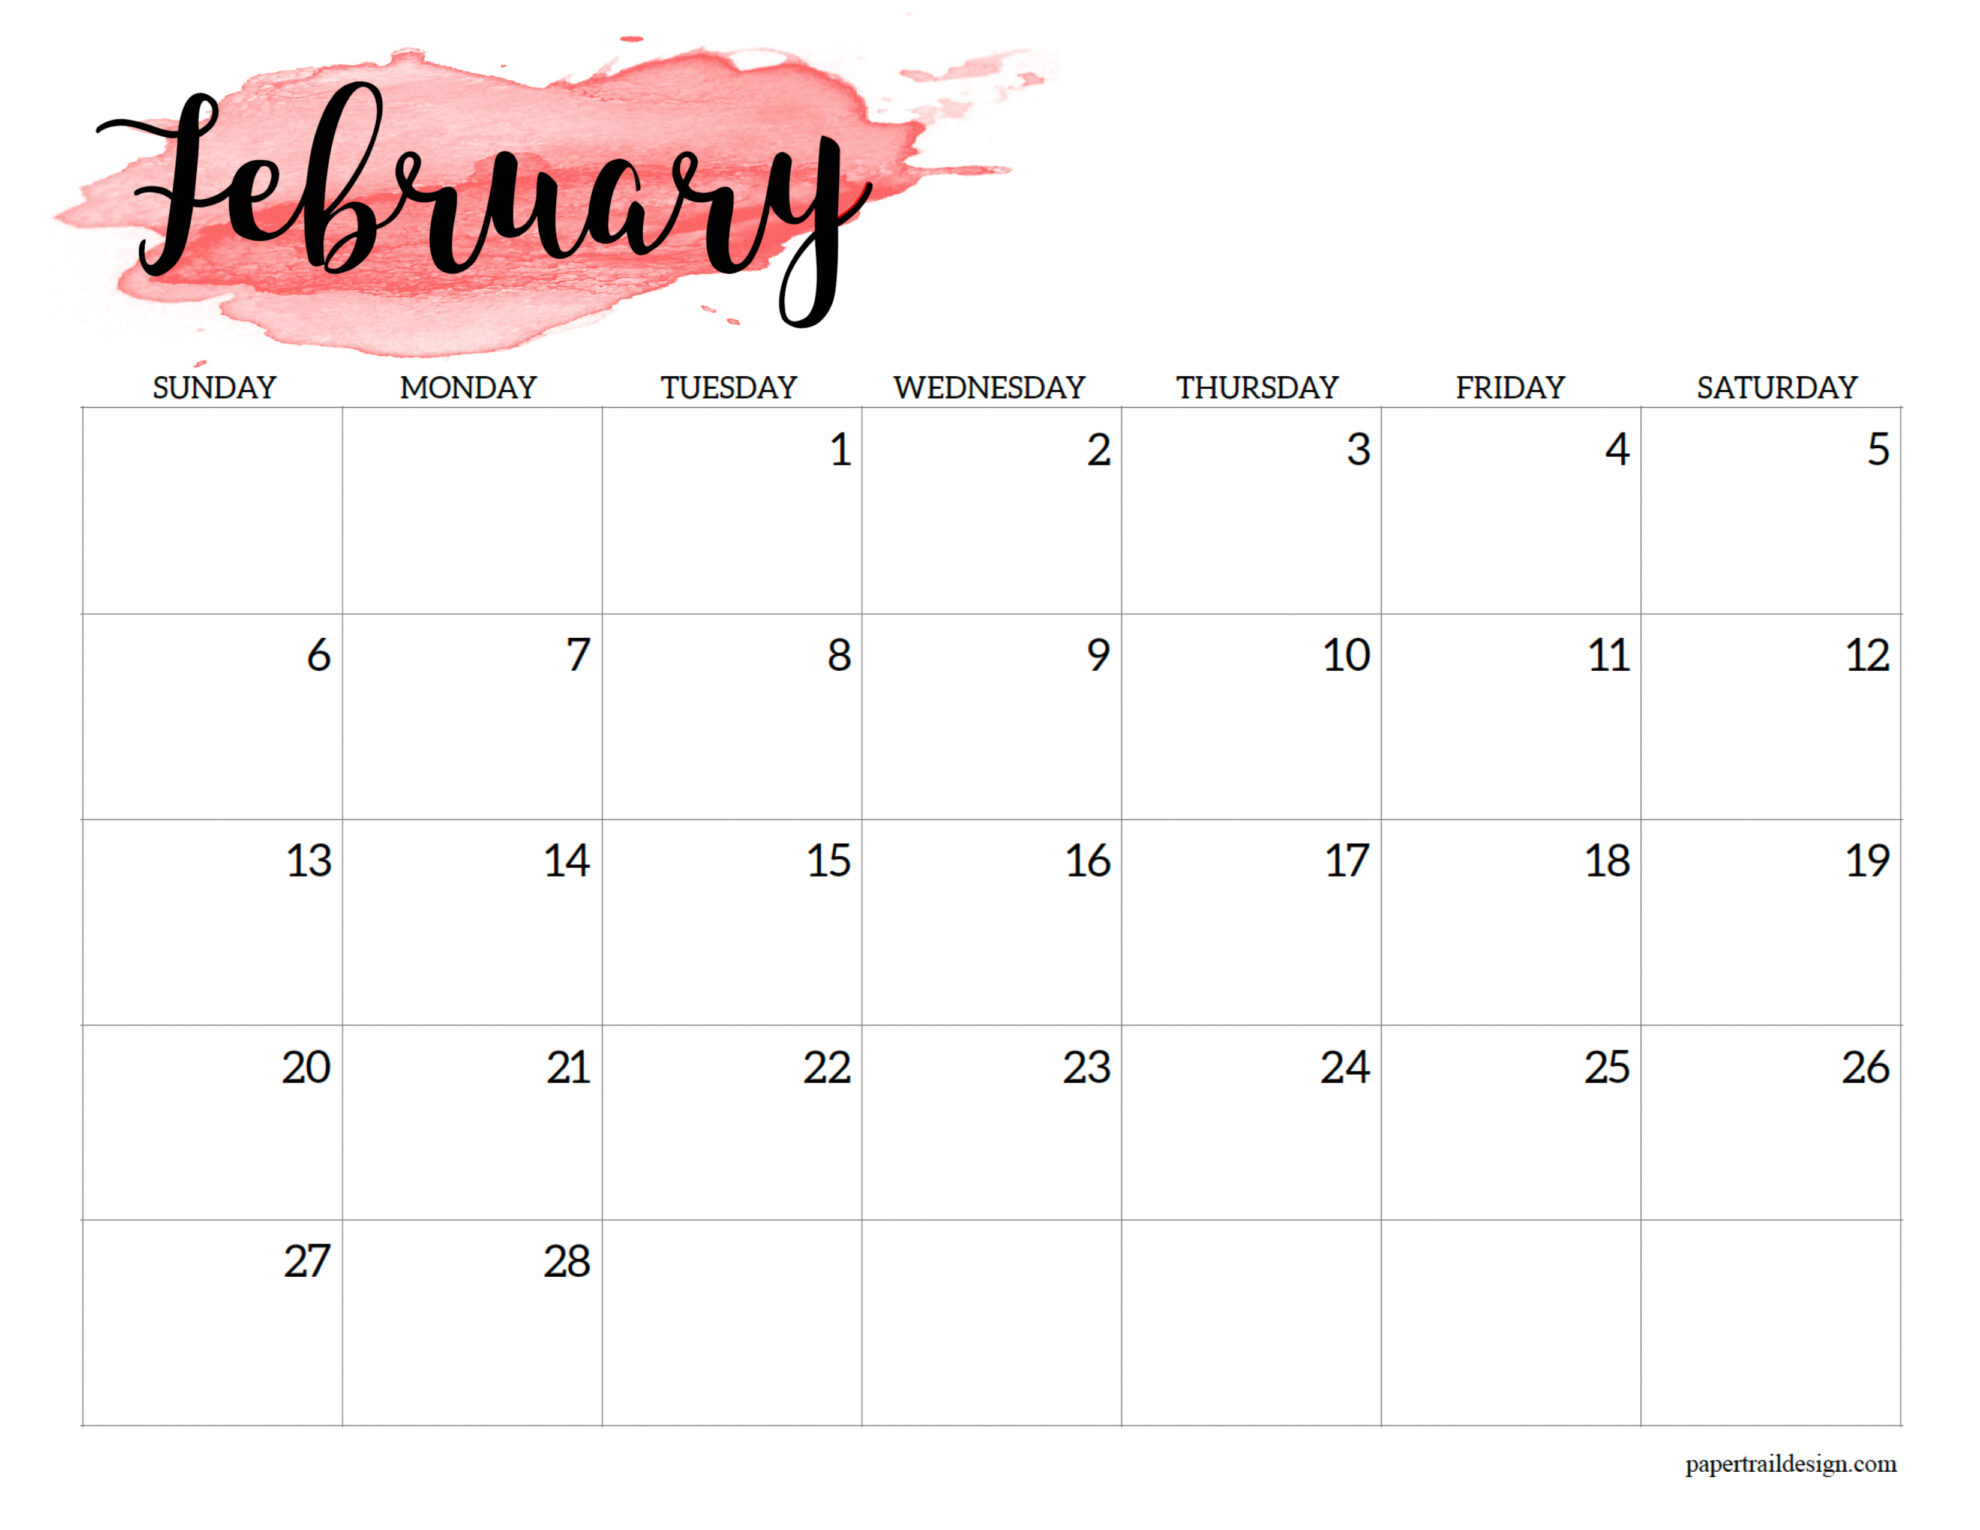 February Calendar 2022 Printable 2022 Calendar Printable - Watercolor - Paper Trail Design